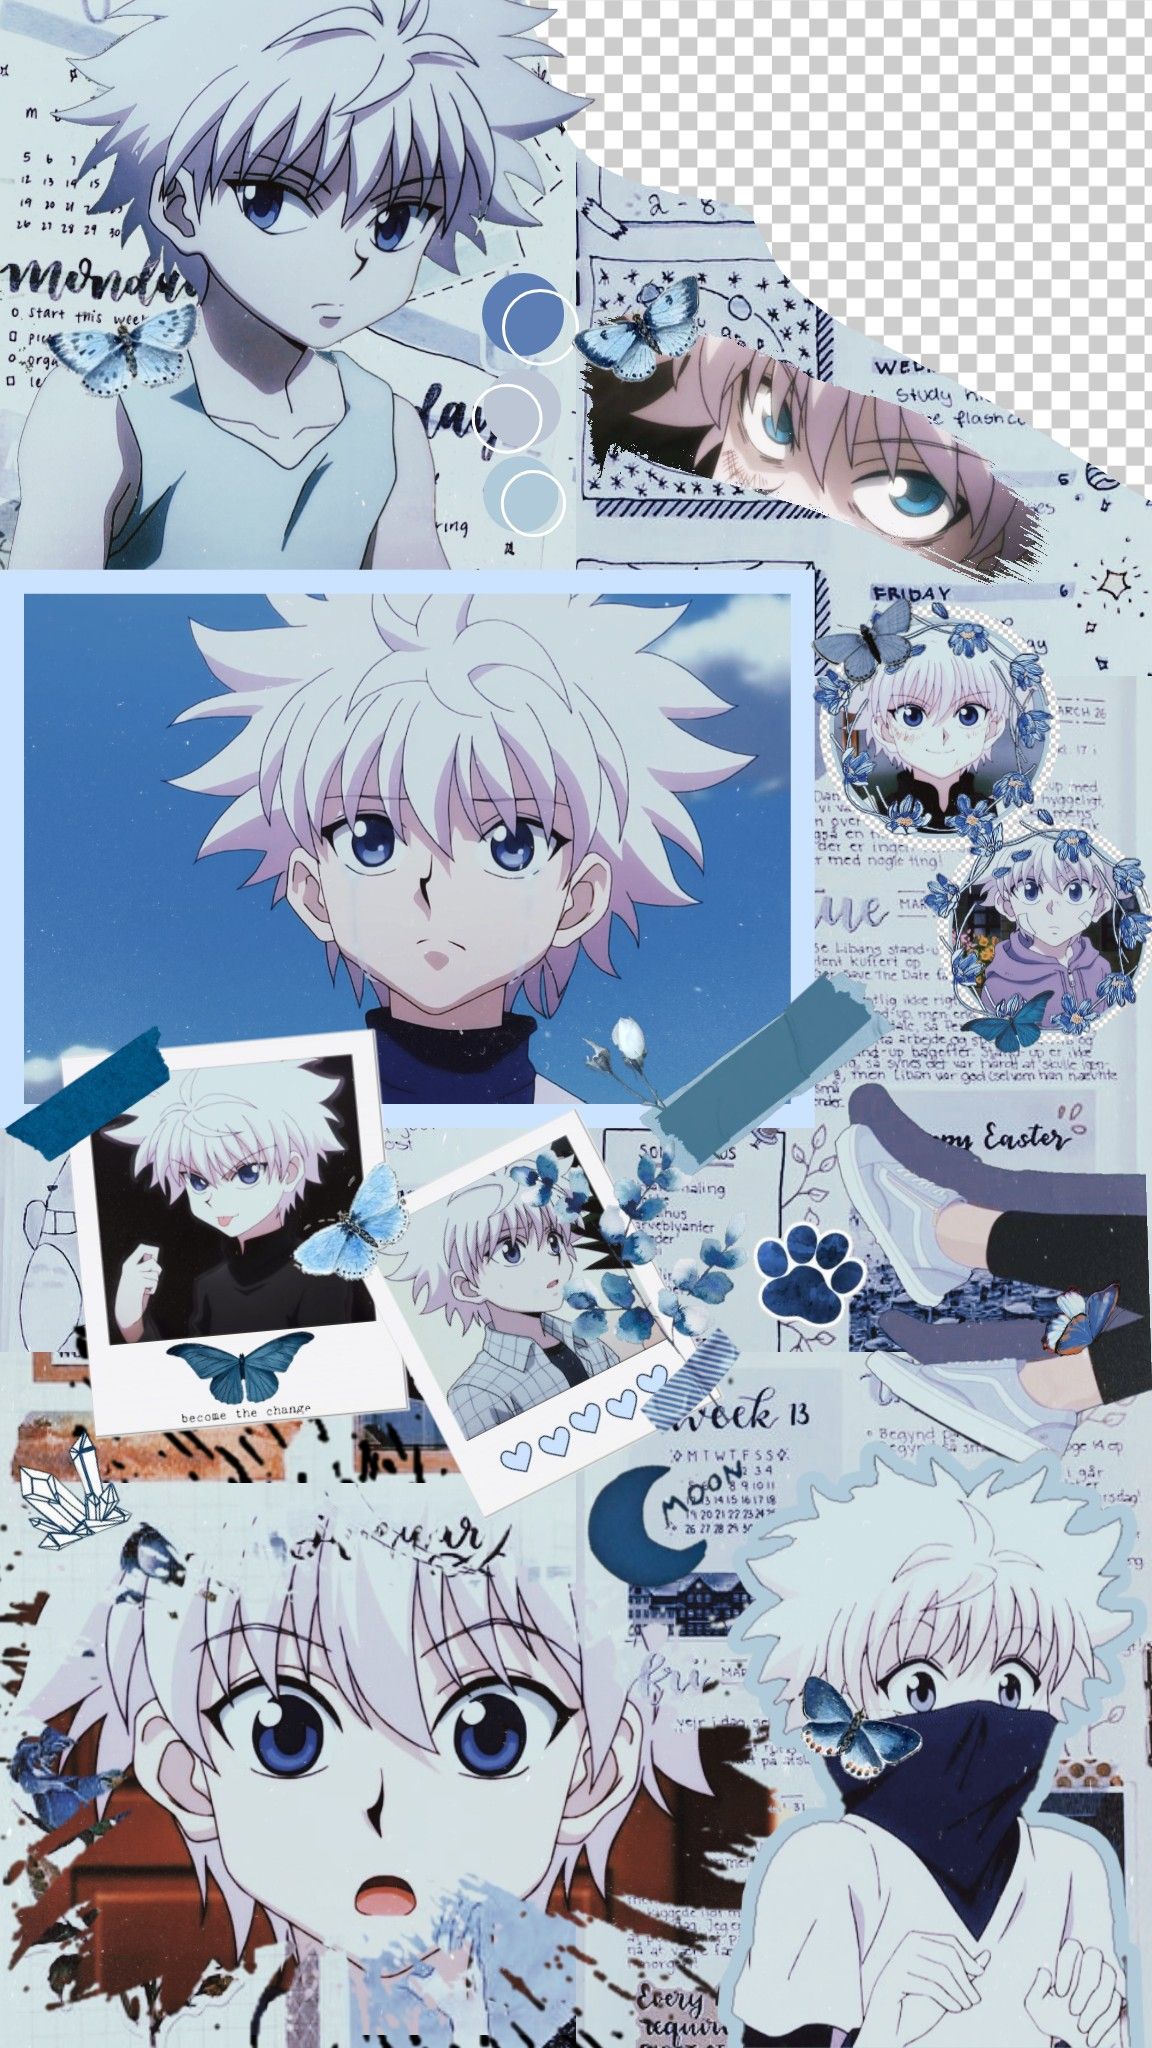 Killua Zoldyeck Wallpaper. Cute anime wallpaper, Anime wallpaper iphone, Anime wallpaper